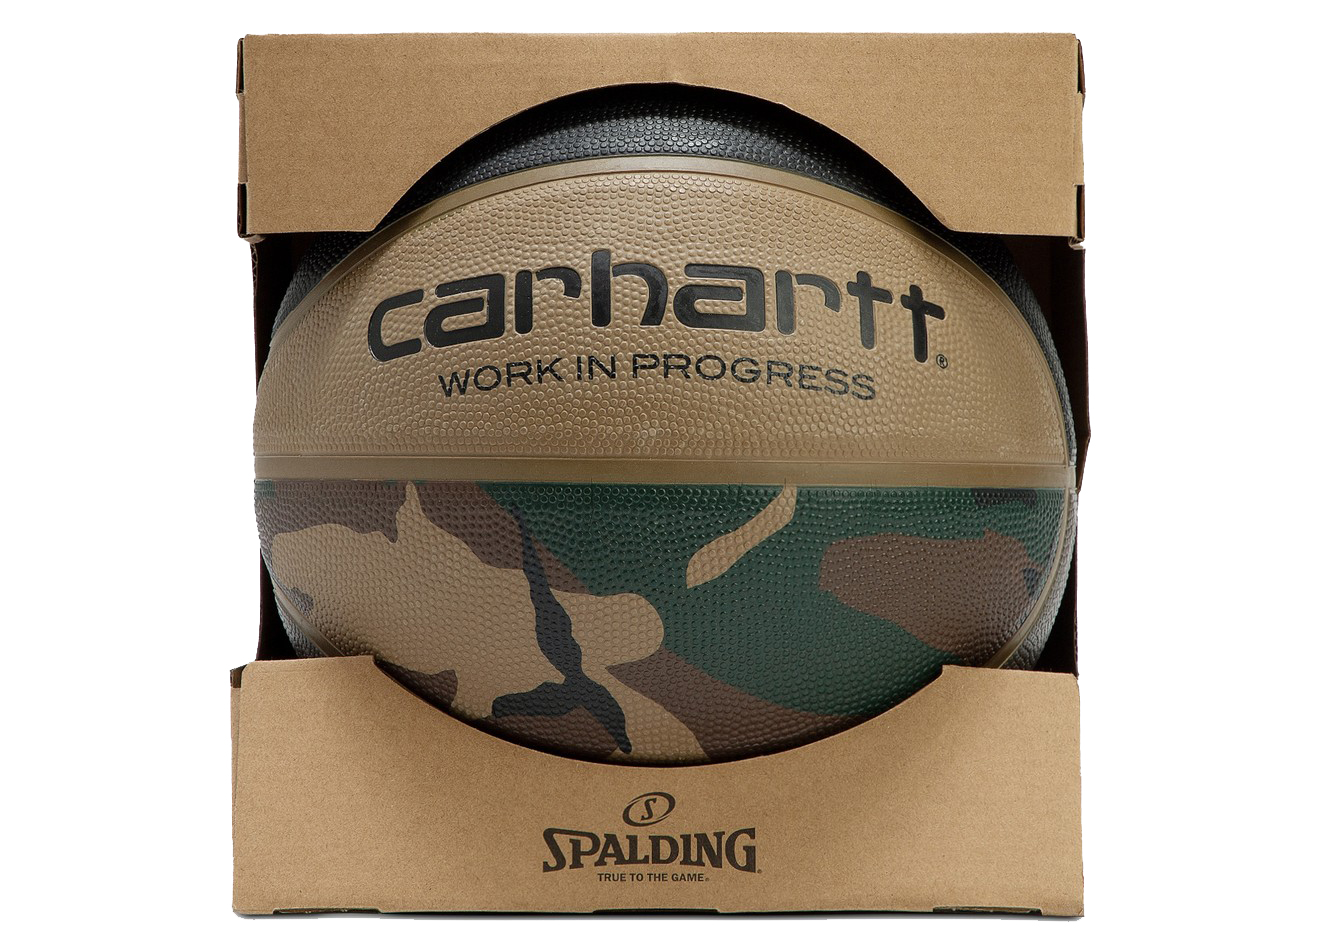 Carhartt WIP x Spalding Valiant 4 Basketball - US